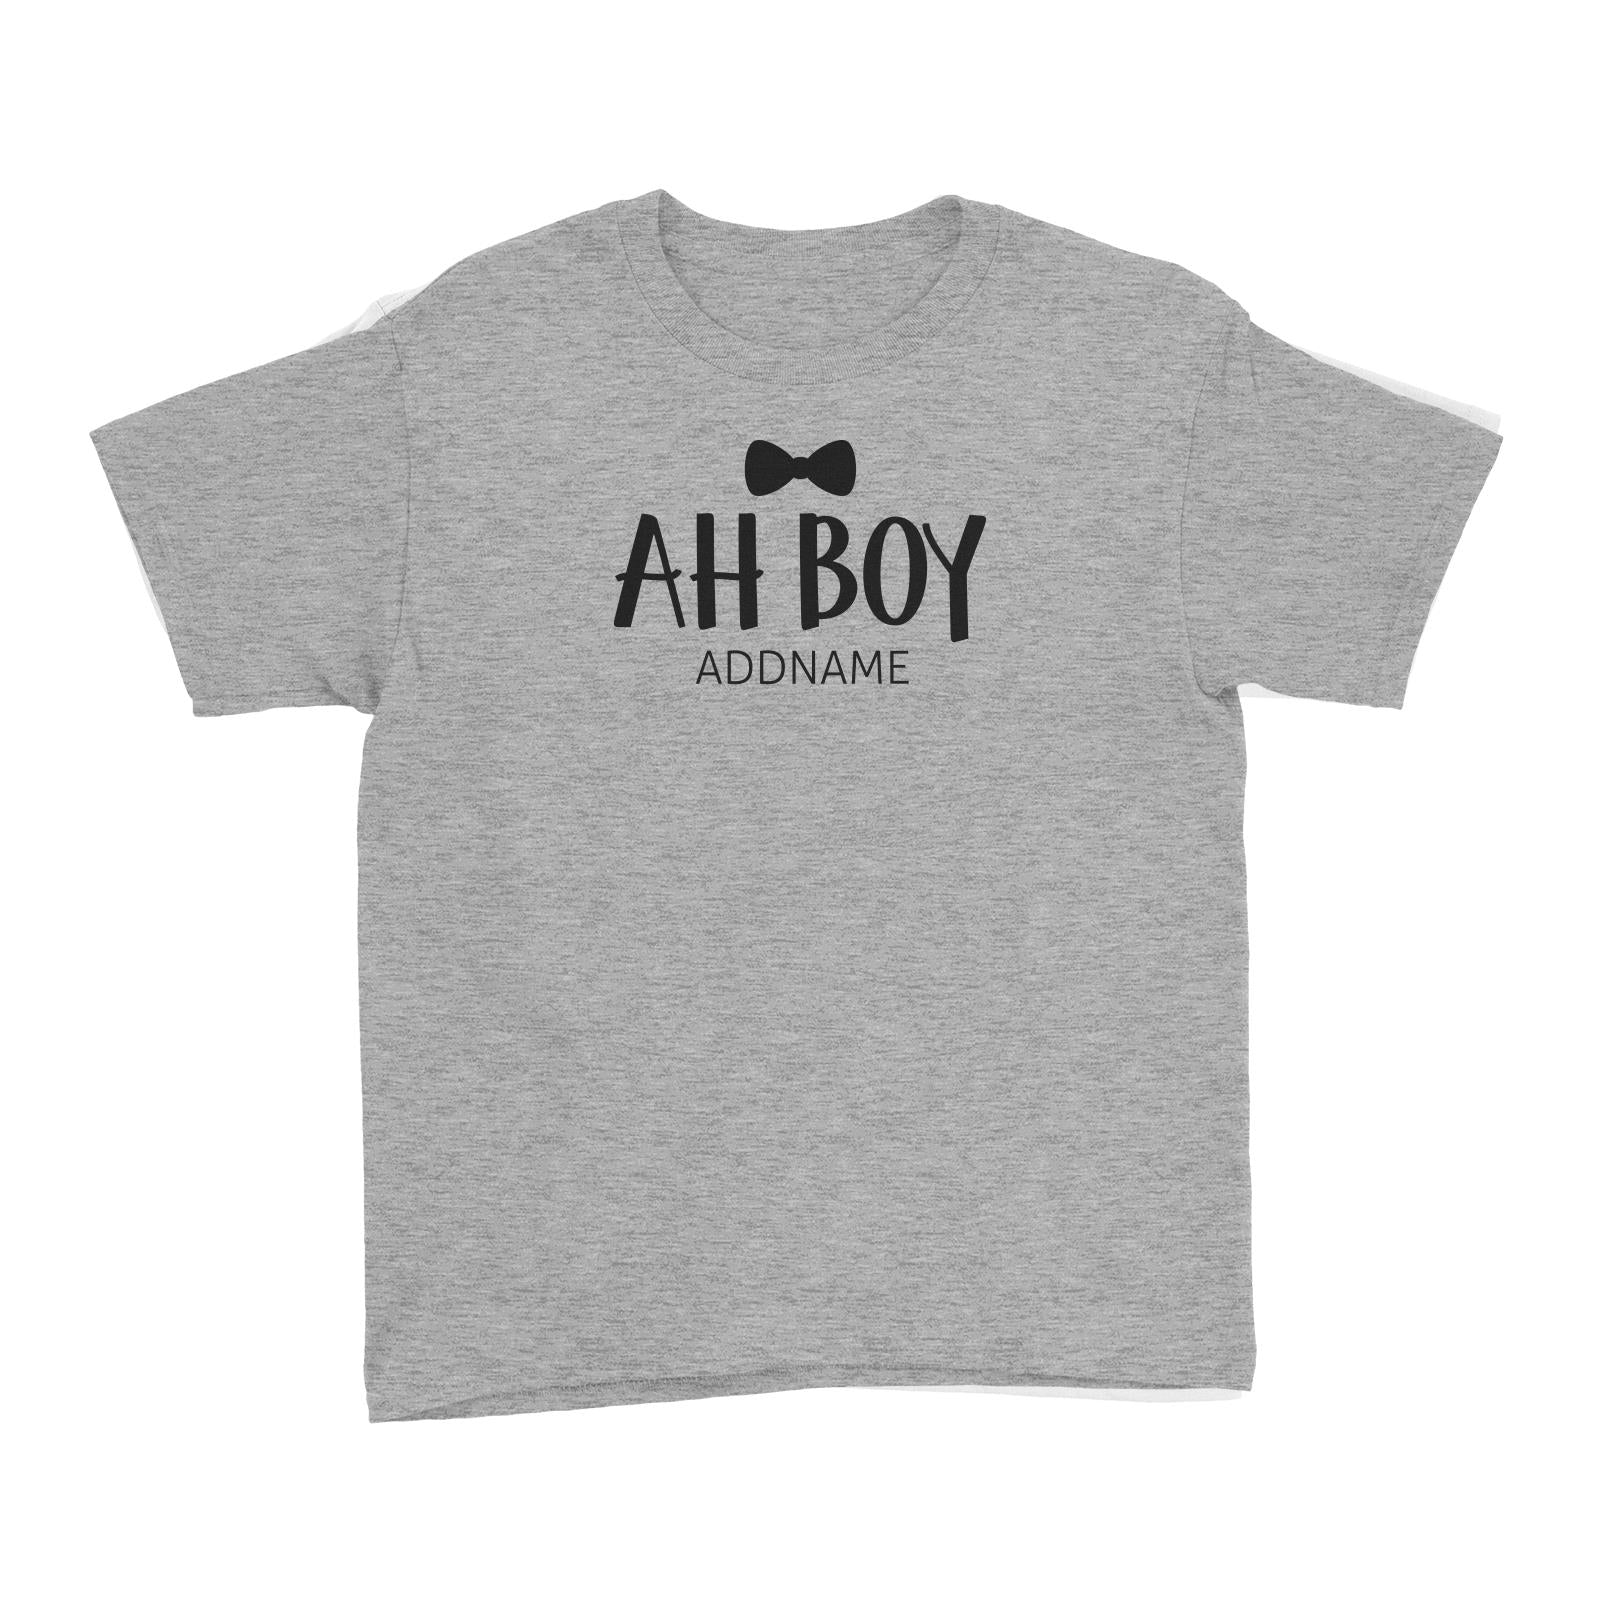 Ah Boy with Black Bow Tie Kid's T-Shirt